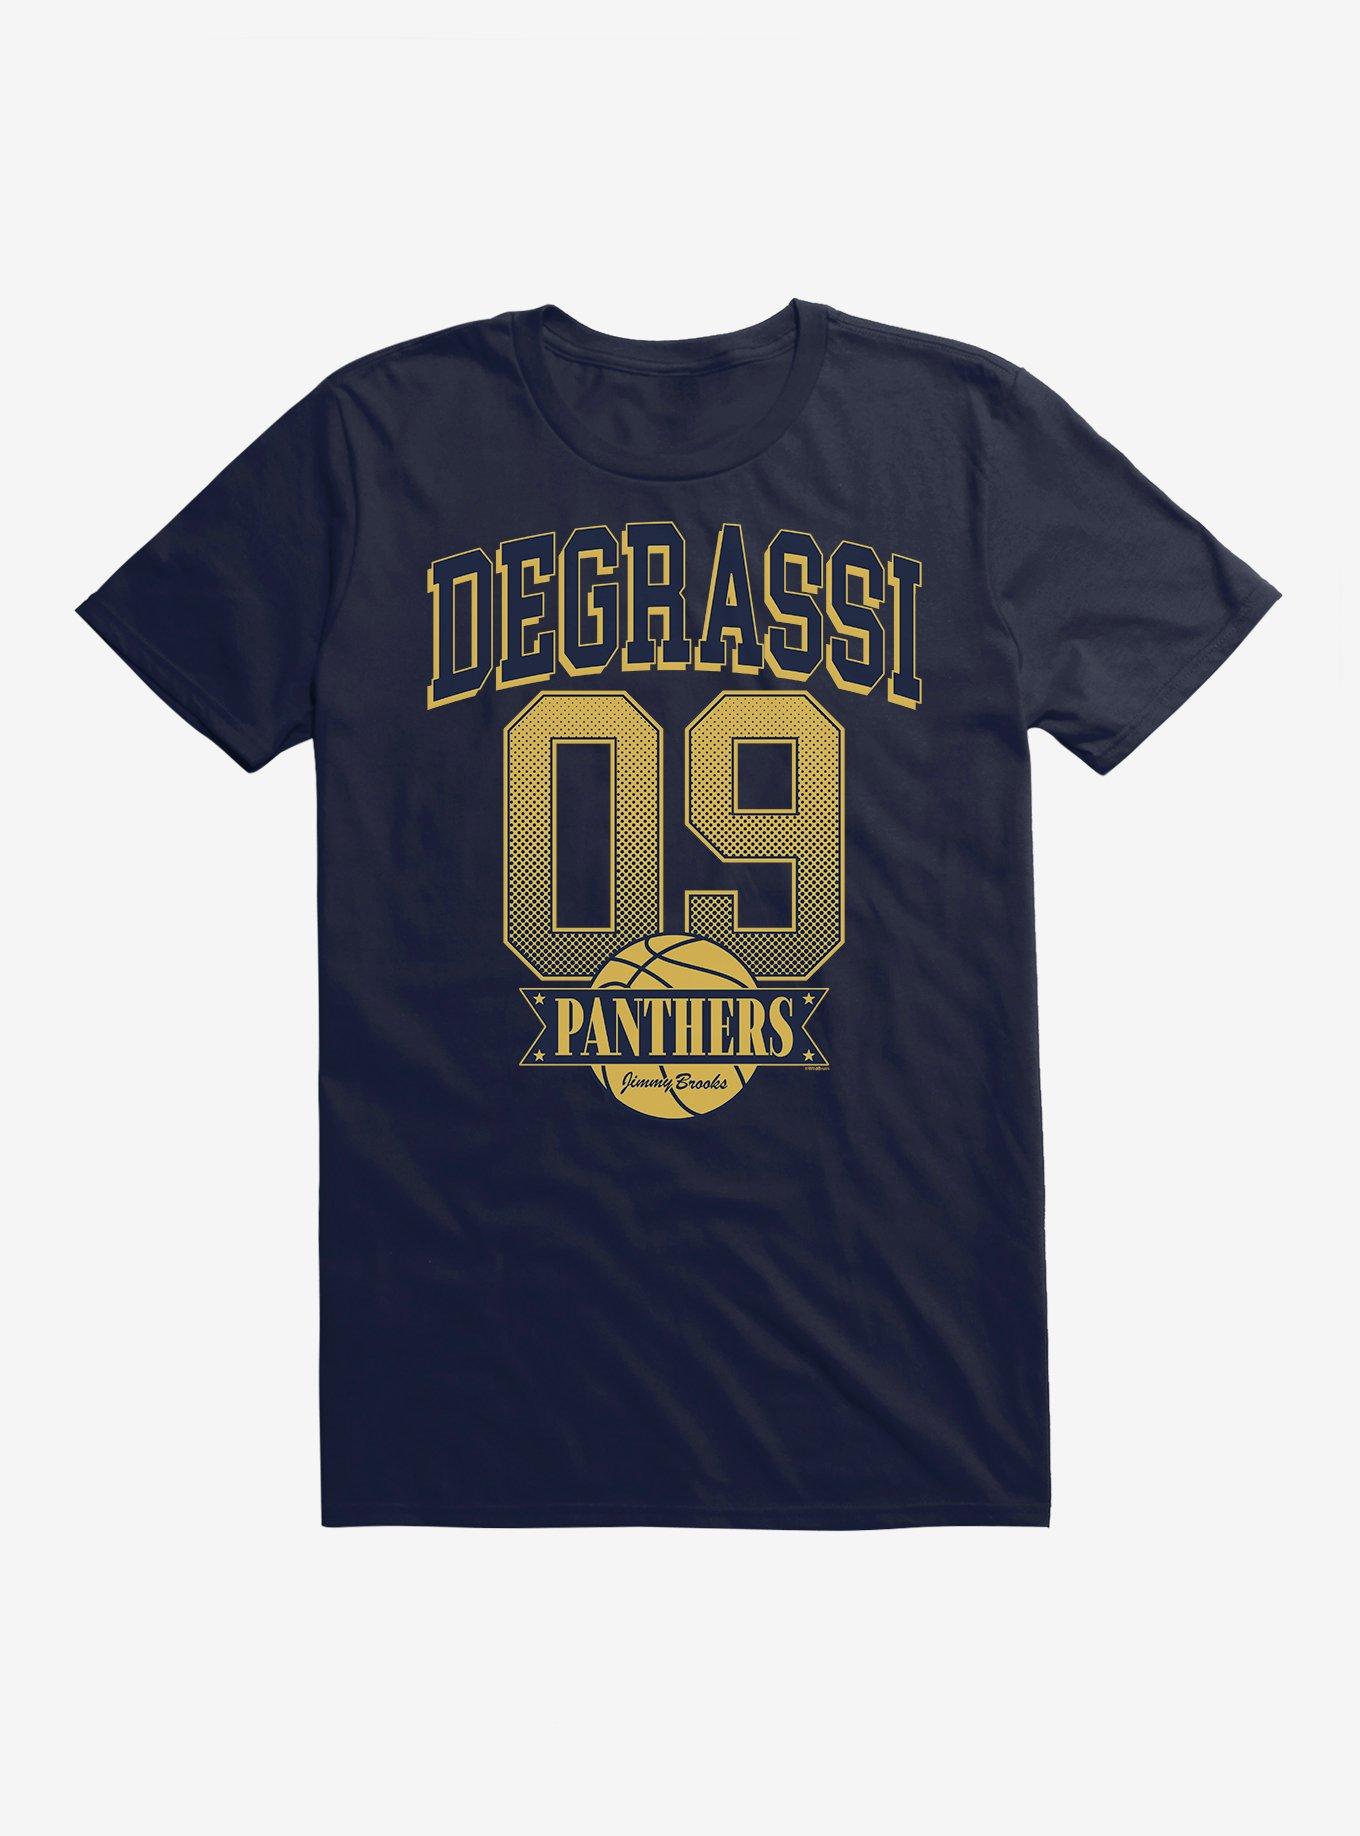 Degrassi: The Next Generation Jersey 09 Jimmy Brooks T-Shirt